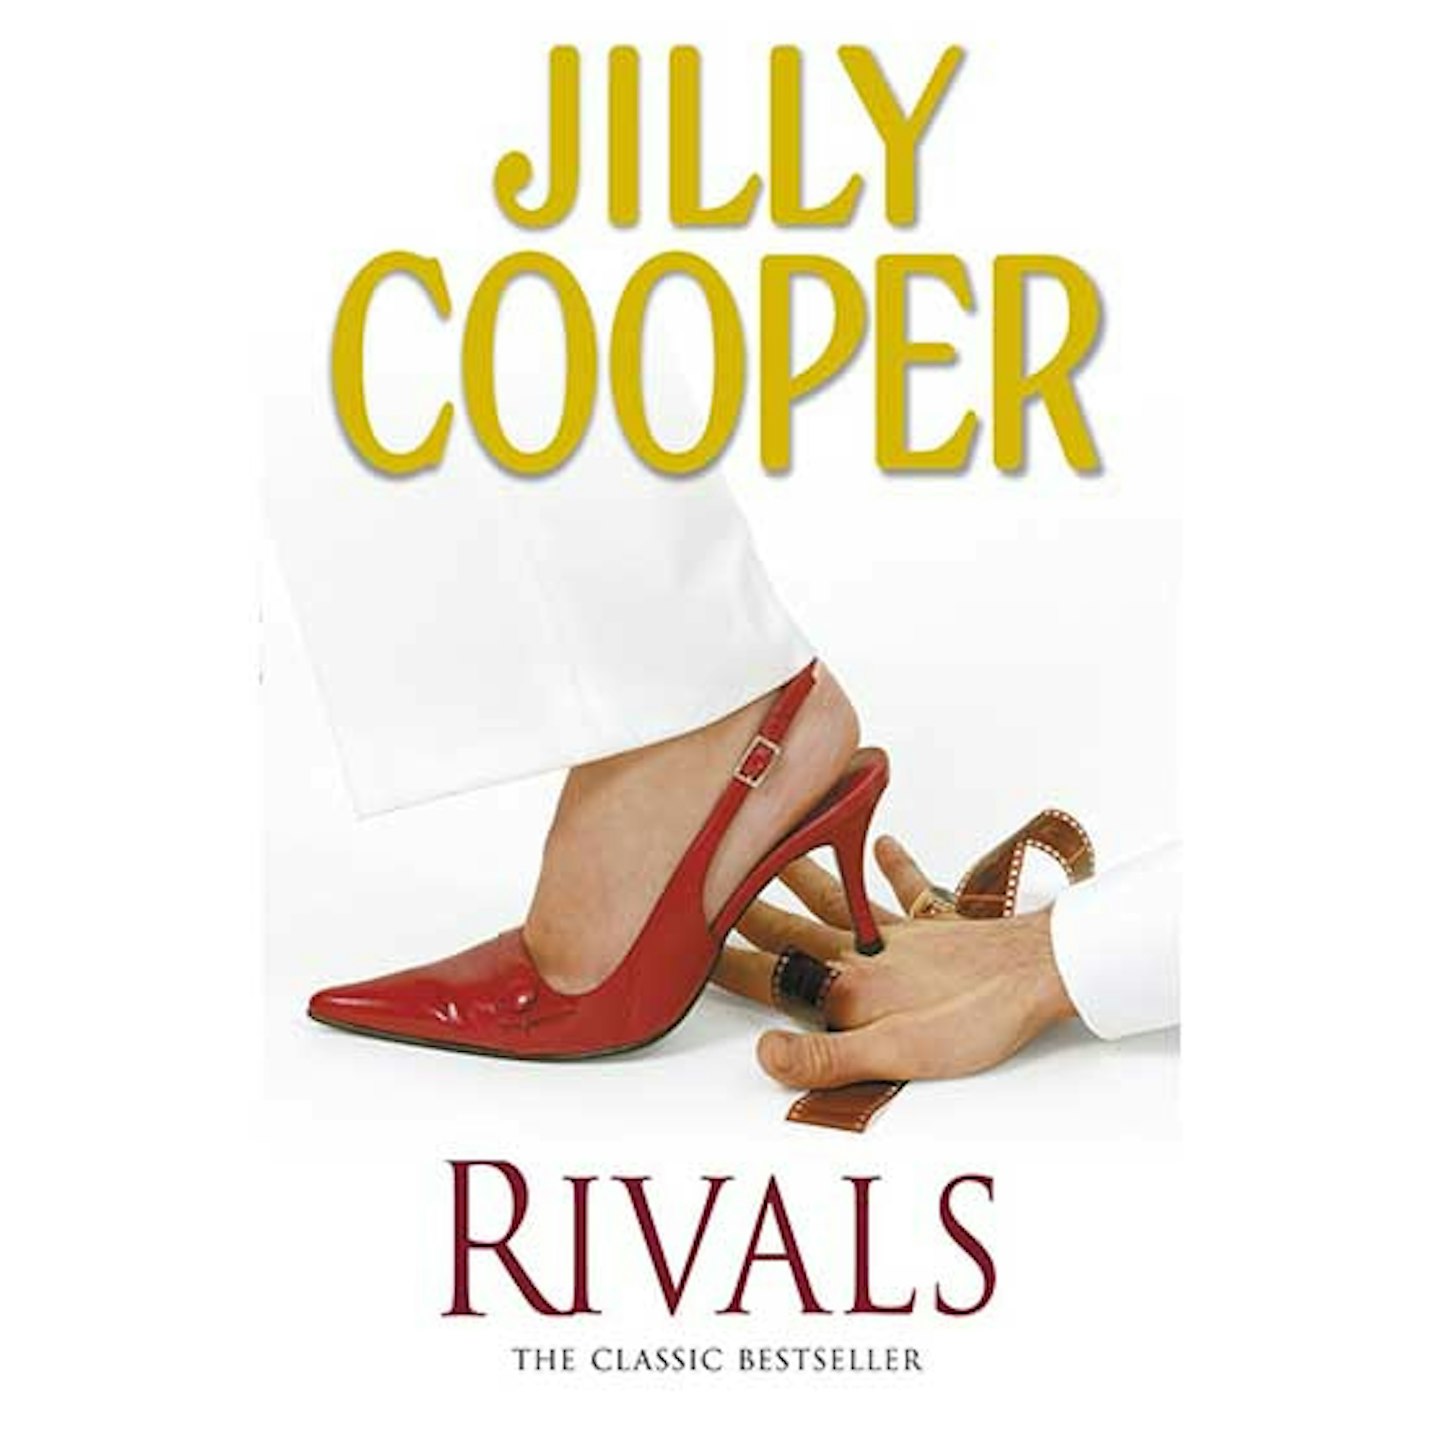 jilly cooper rivals